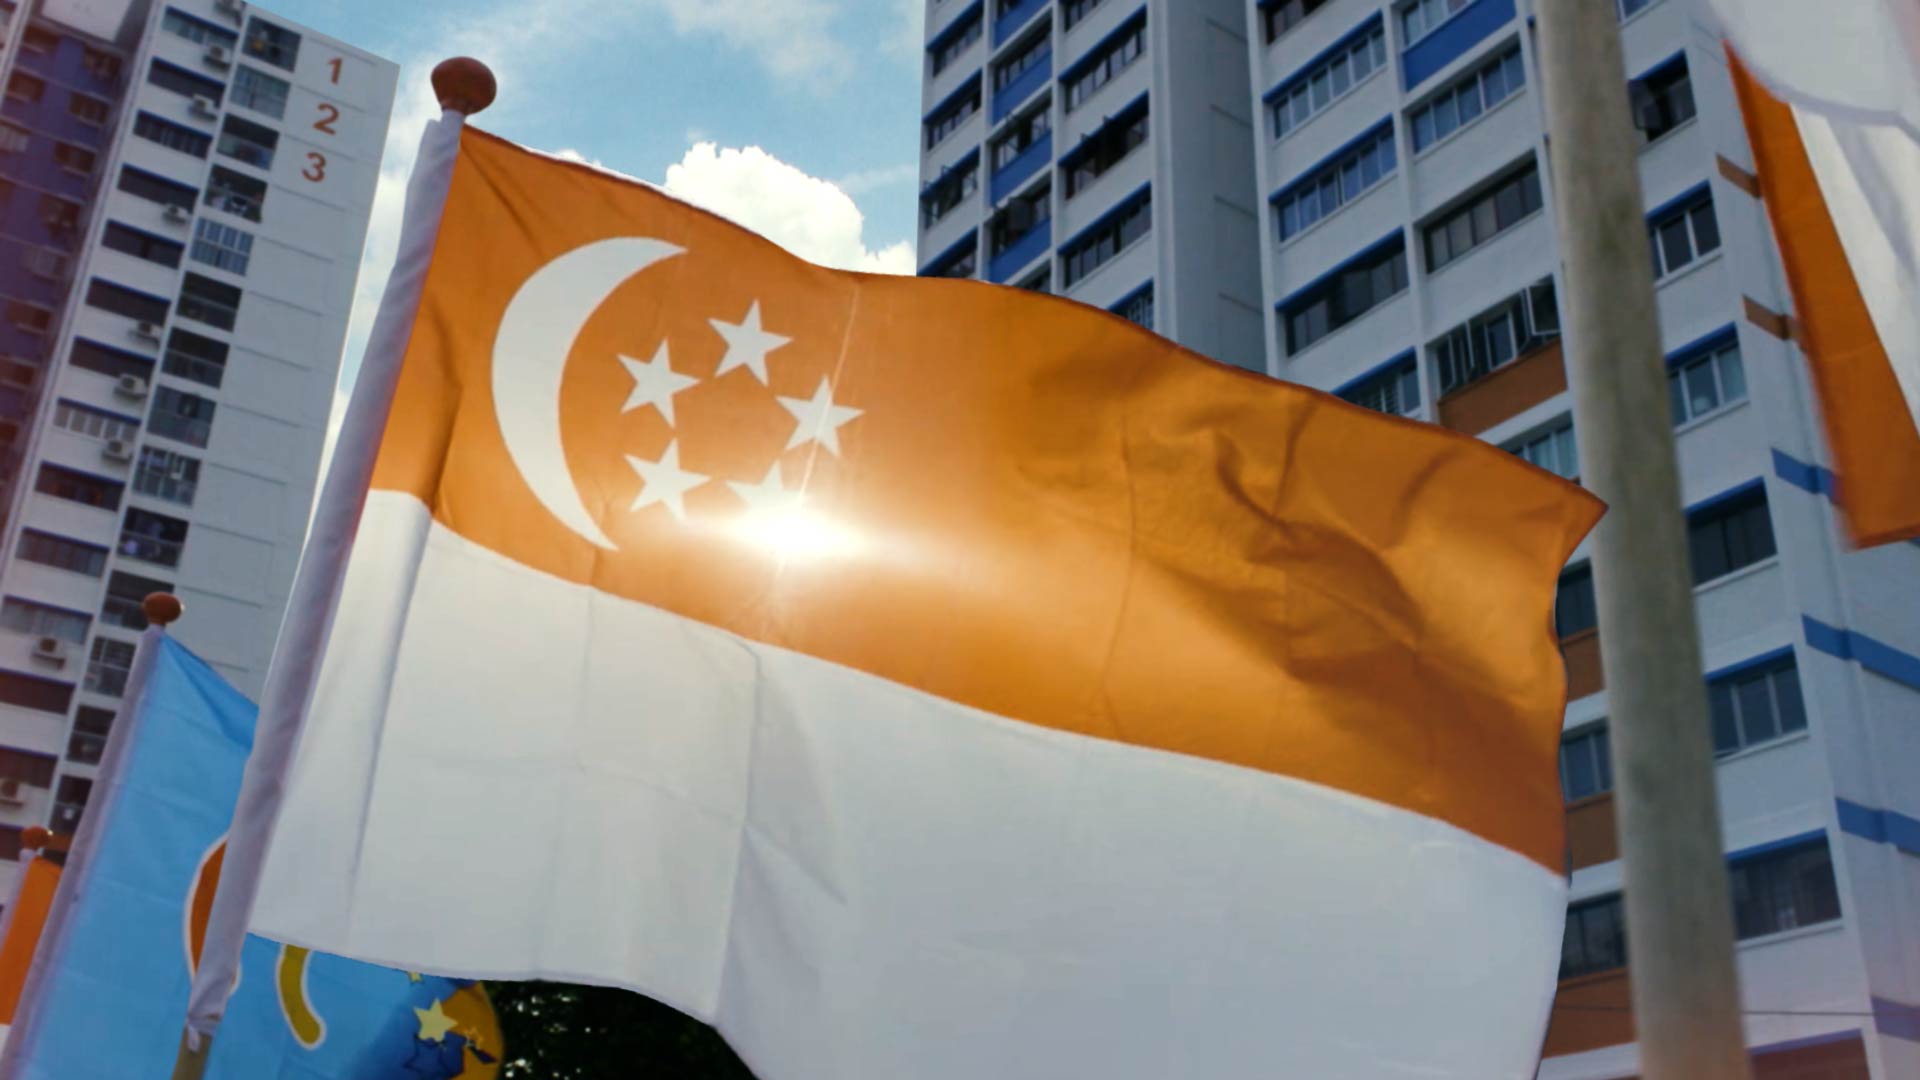 Singtel Celebrates Singapore Majulah Spirit with National Day film tribute